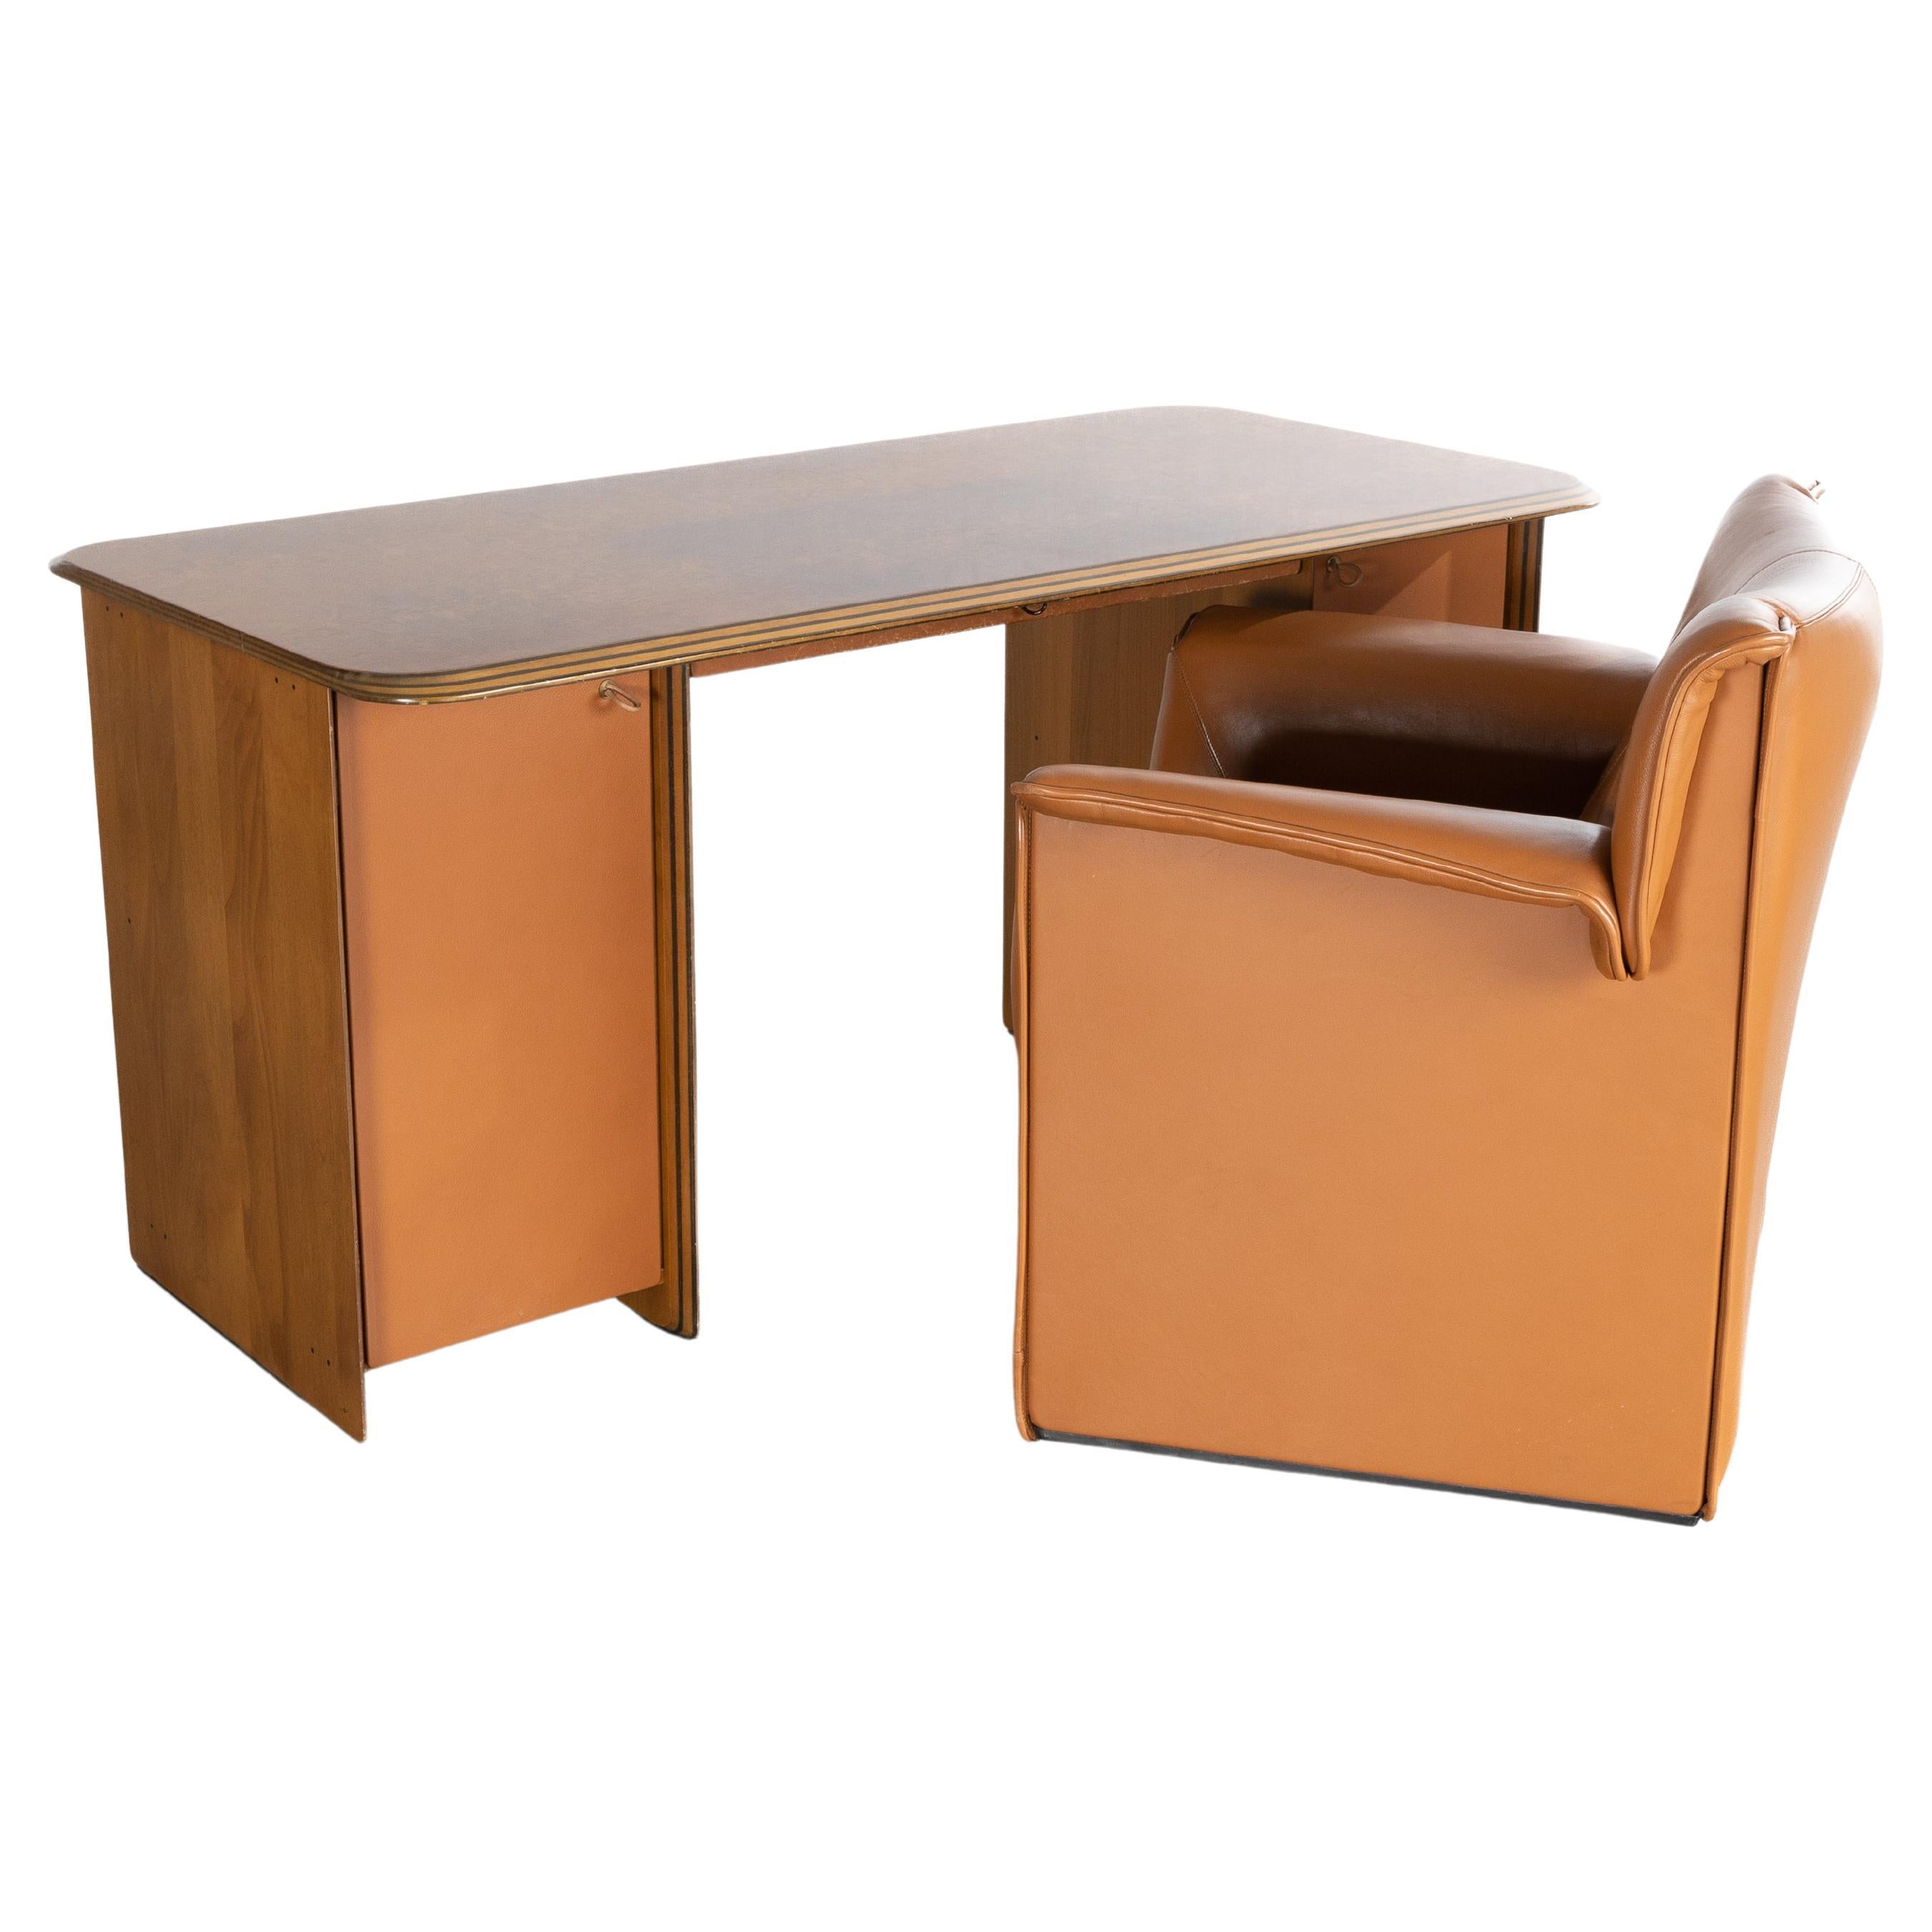 Artona by Afra & Tobia Scarpa – Walnut veneer laminate desk and chair